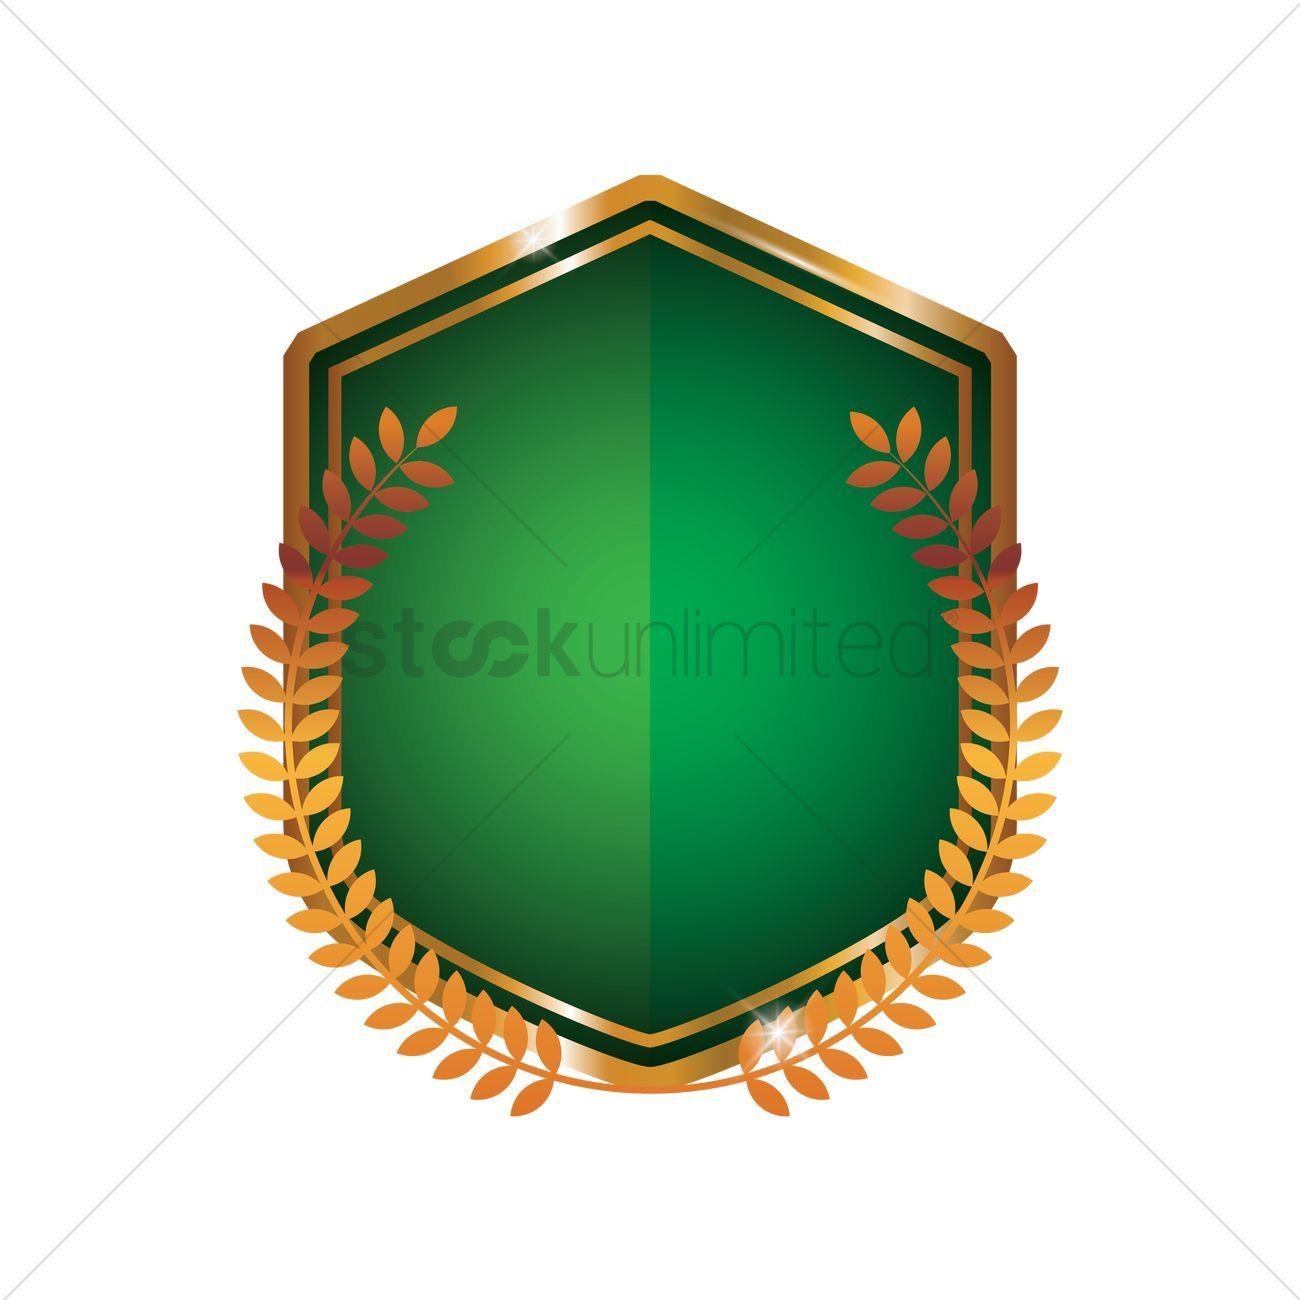 Green and Red Shield Logo - Green shield emblem Vector Image - 1874318 | StockUnlimited